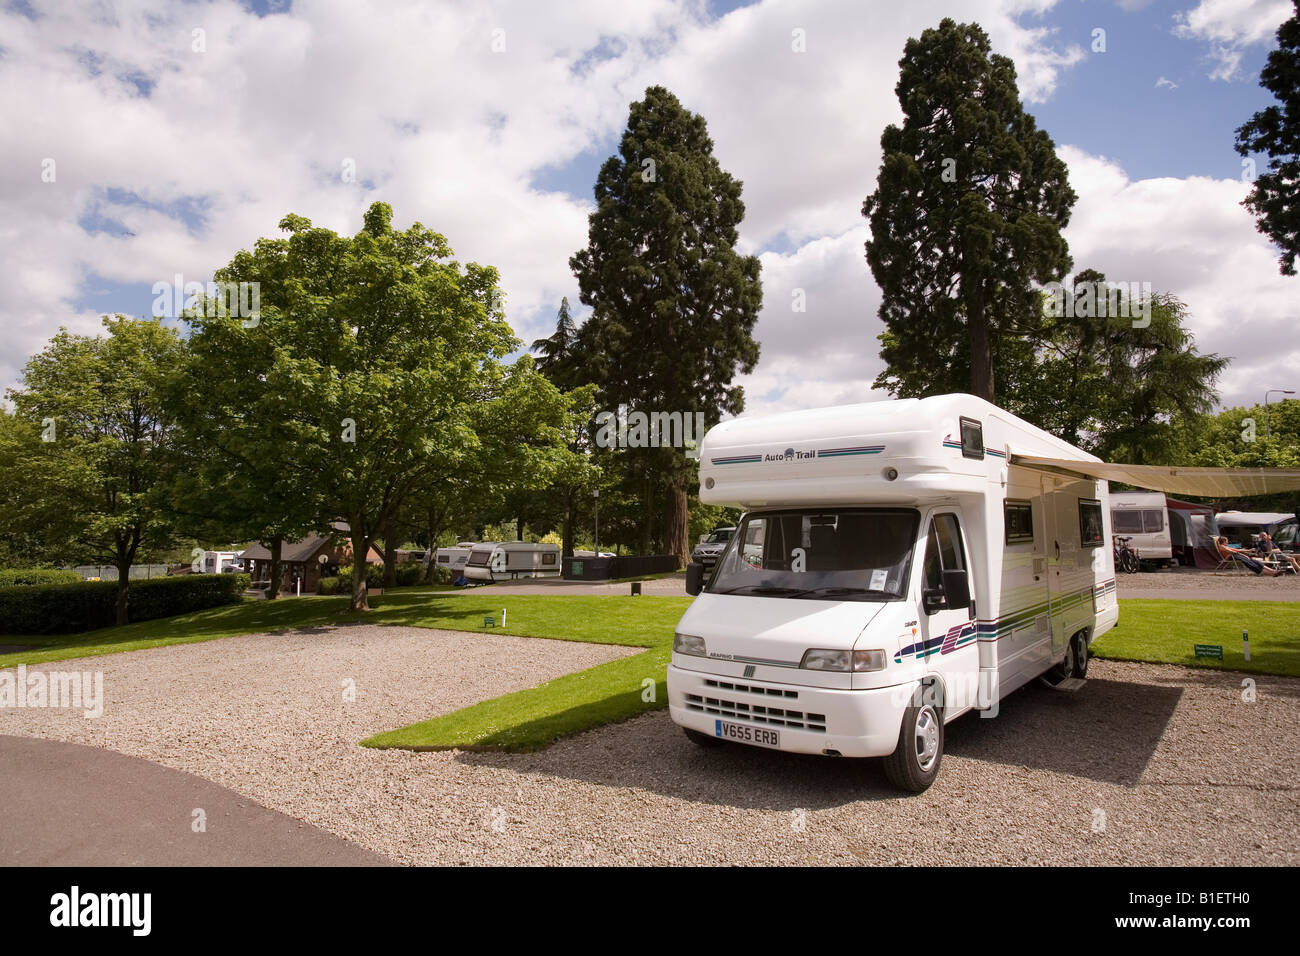 UK tourism Tredegar Park Caravan Club Site empty pitch next to auto Trail motorhome Stock Photo